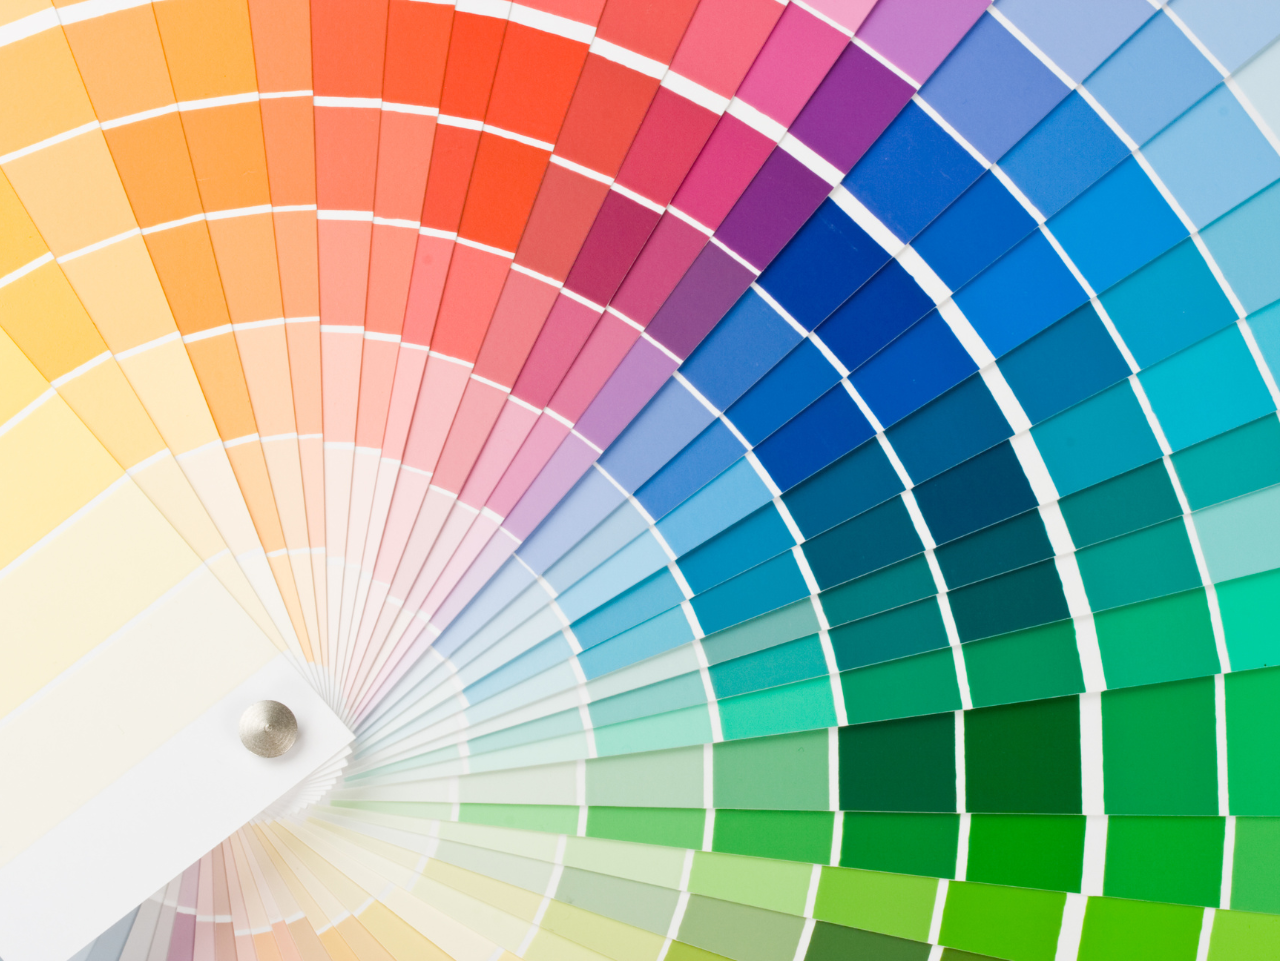 Paint color strips laid out in a fan shape